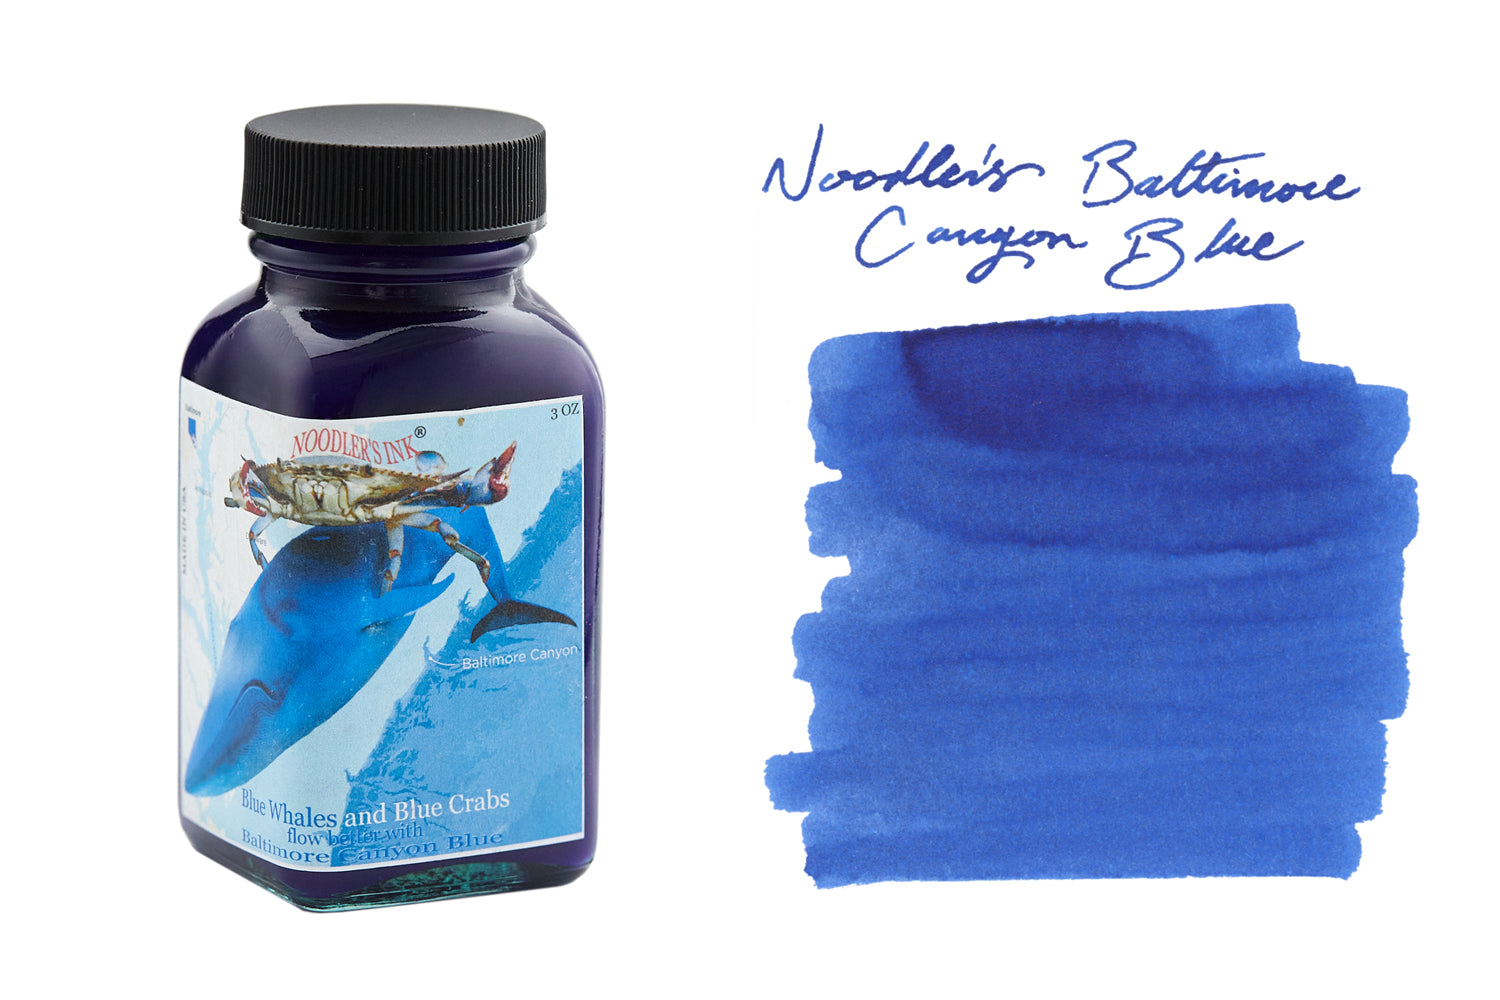 Noodler's Baltimore Canyon Blue (3oz) Bottled Ink (Baltimore-Washingto